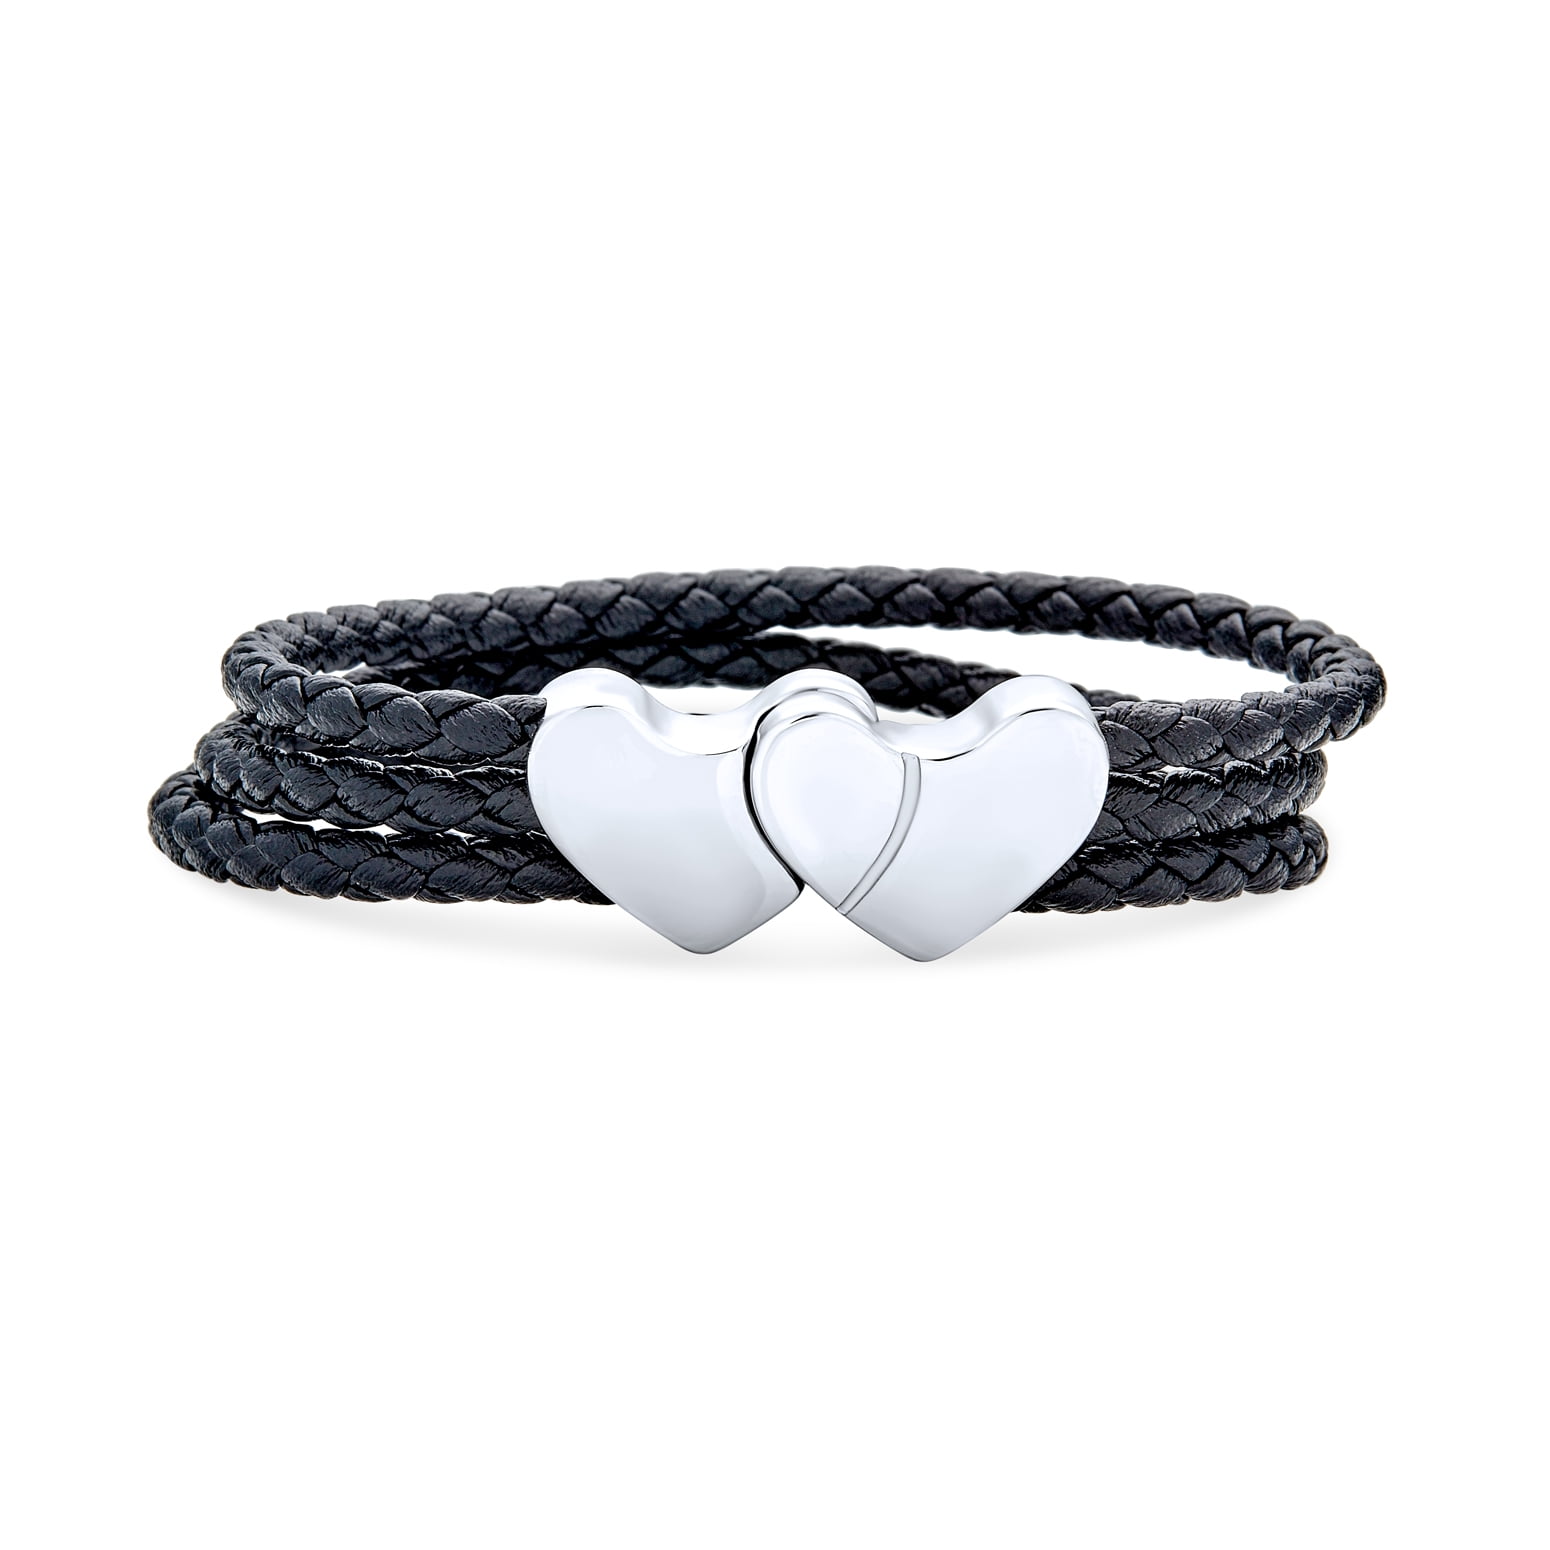 Tan 3mm Leather single or double Bracelet Heart Shape Clasp Add Beads on 